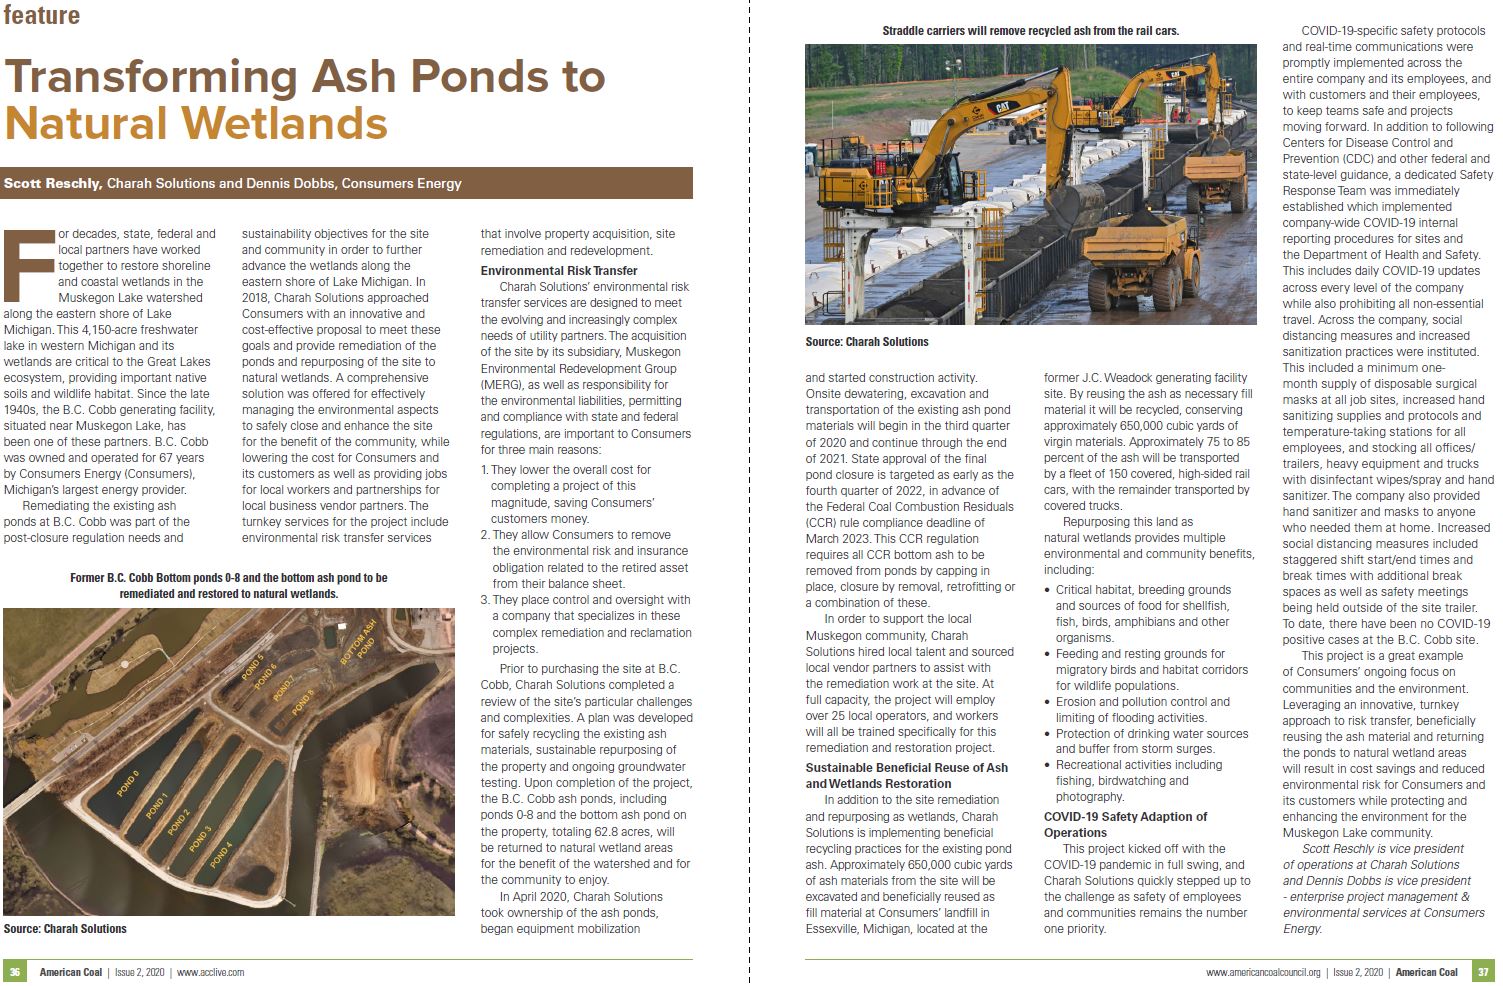 Transforming Ash Ponds to Natural Wetlands